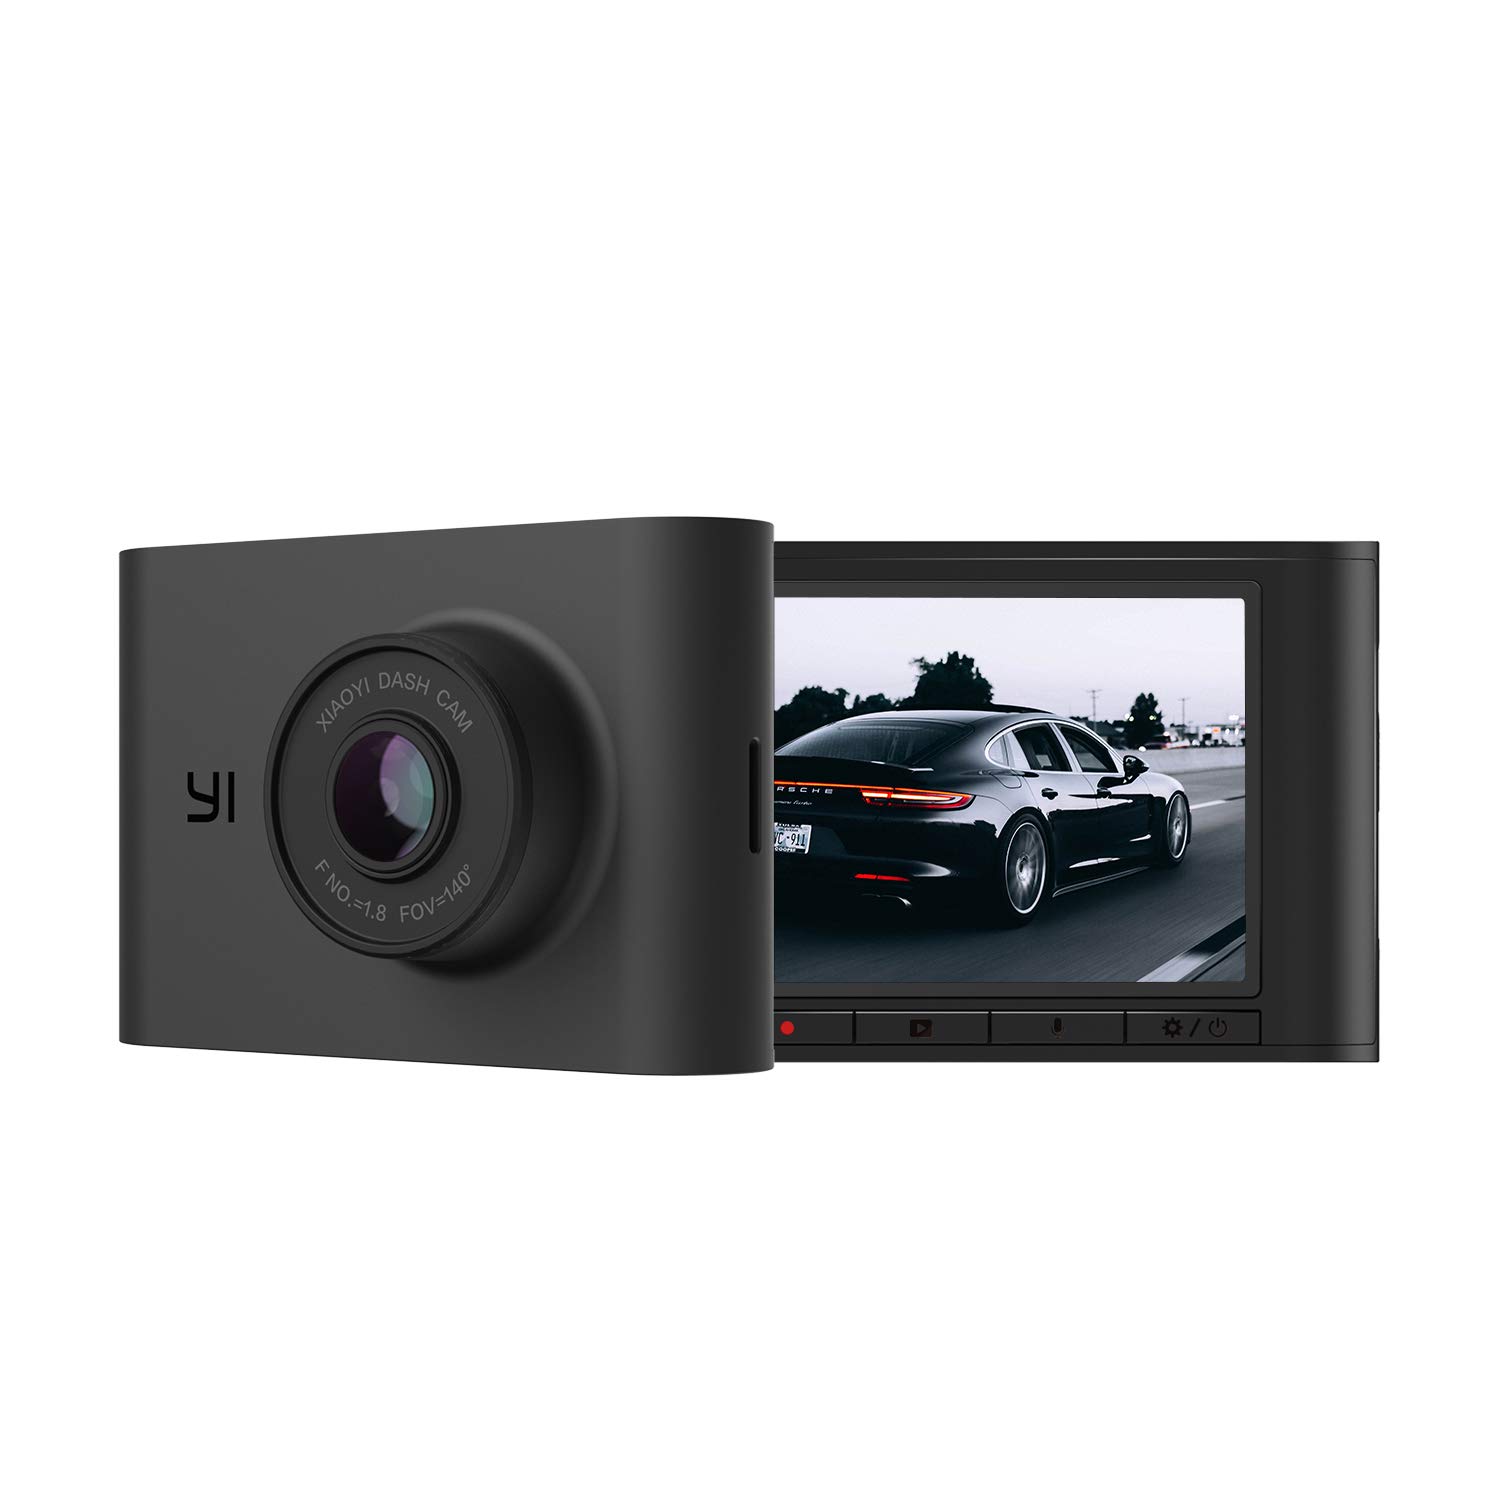 Jeg var overrasket Derfor til eksil A new dash-cam from YI has the latest Sony night-vision sensor -  NotebookCheck.net News